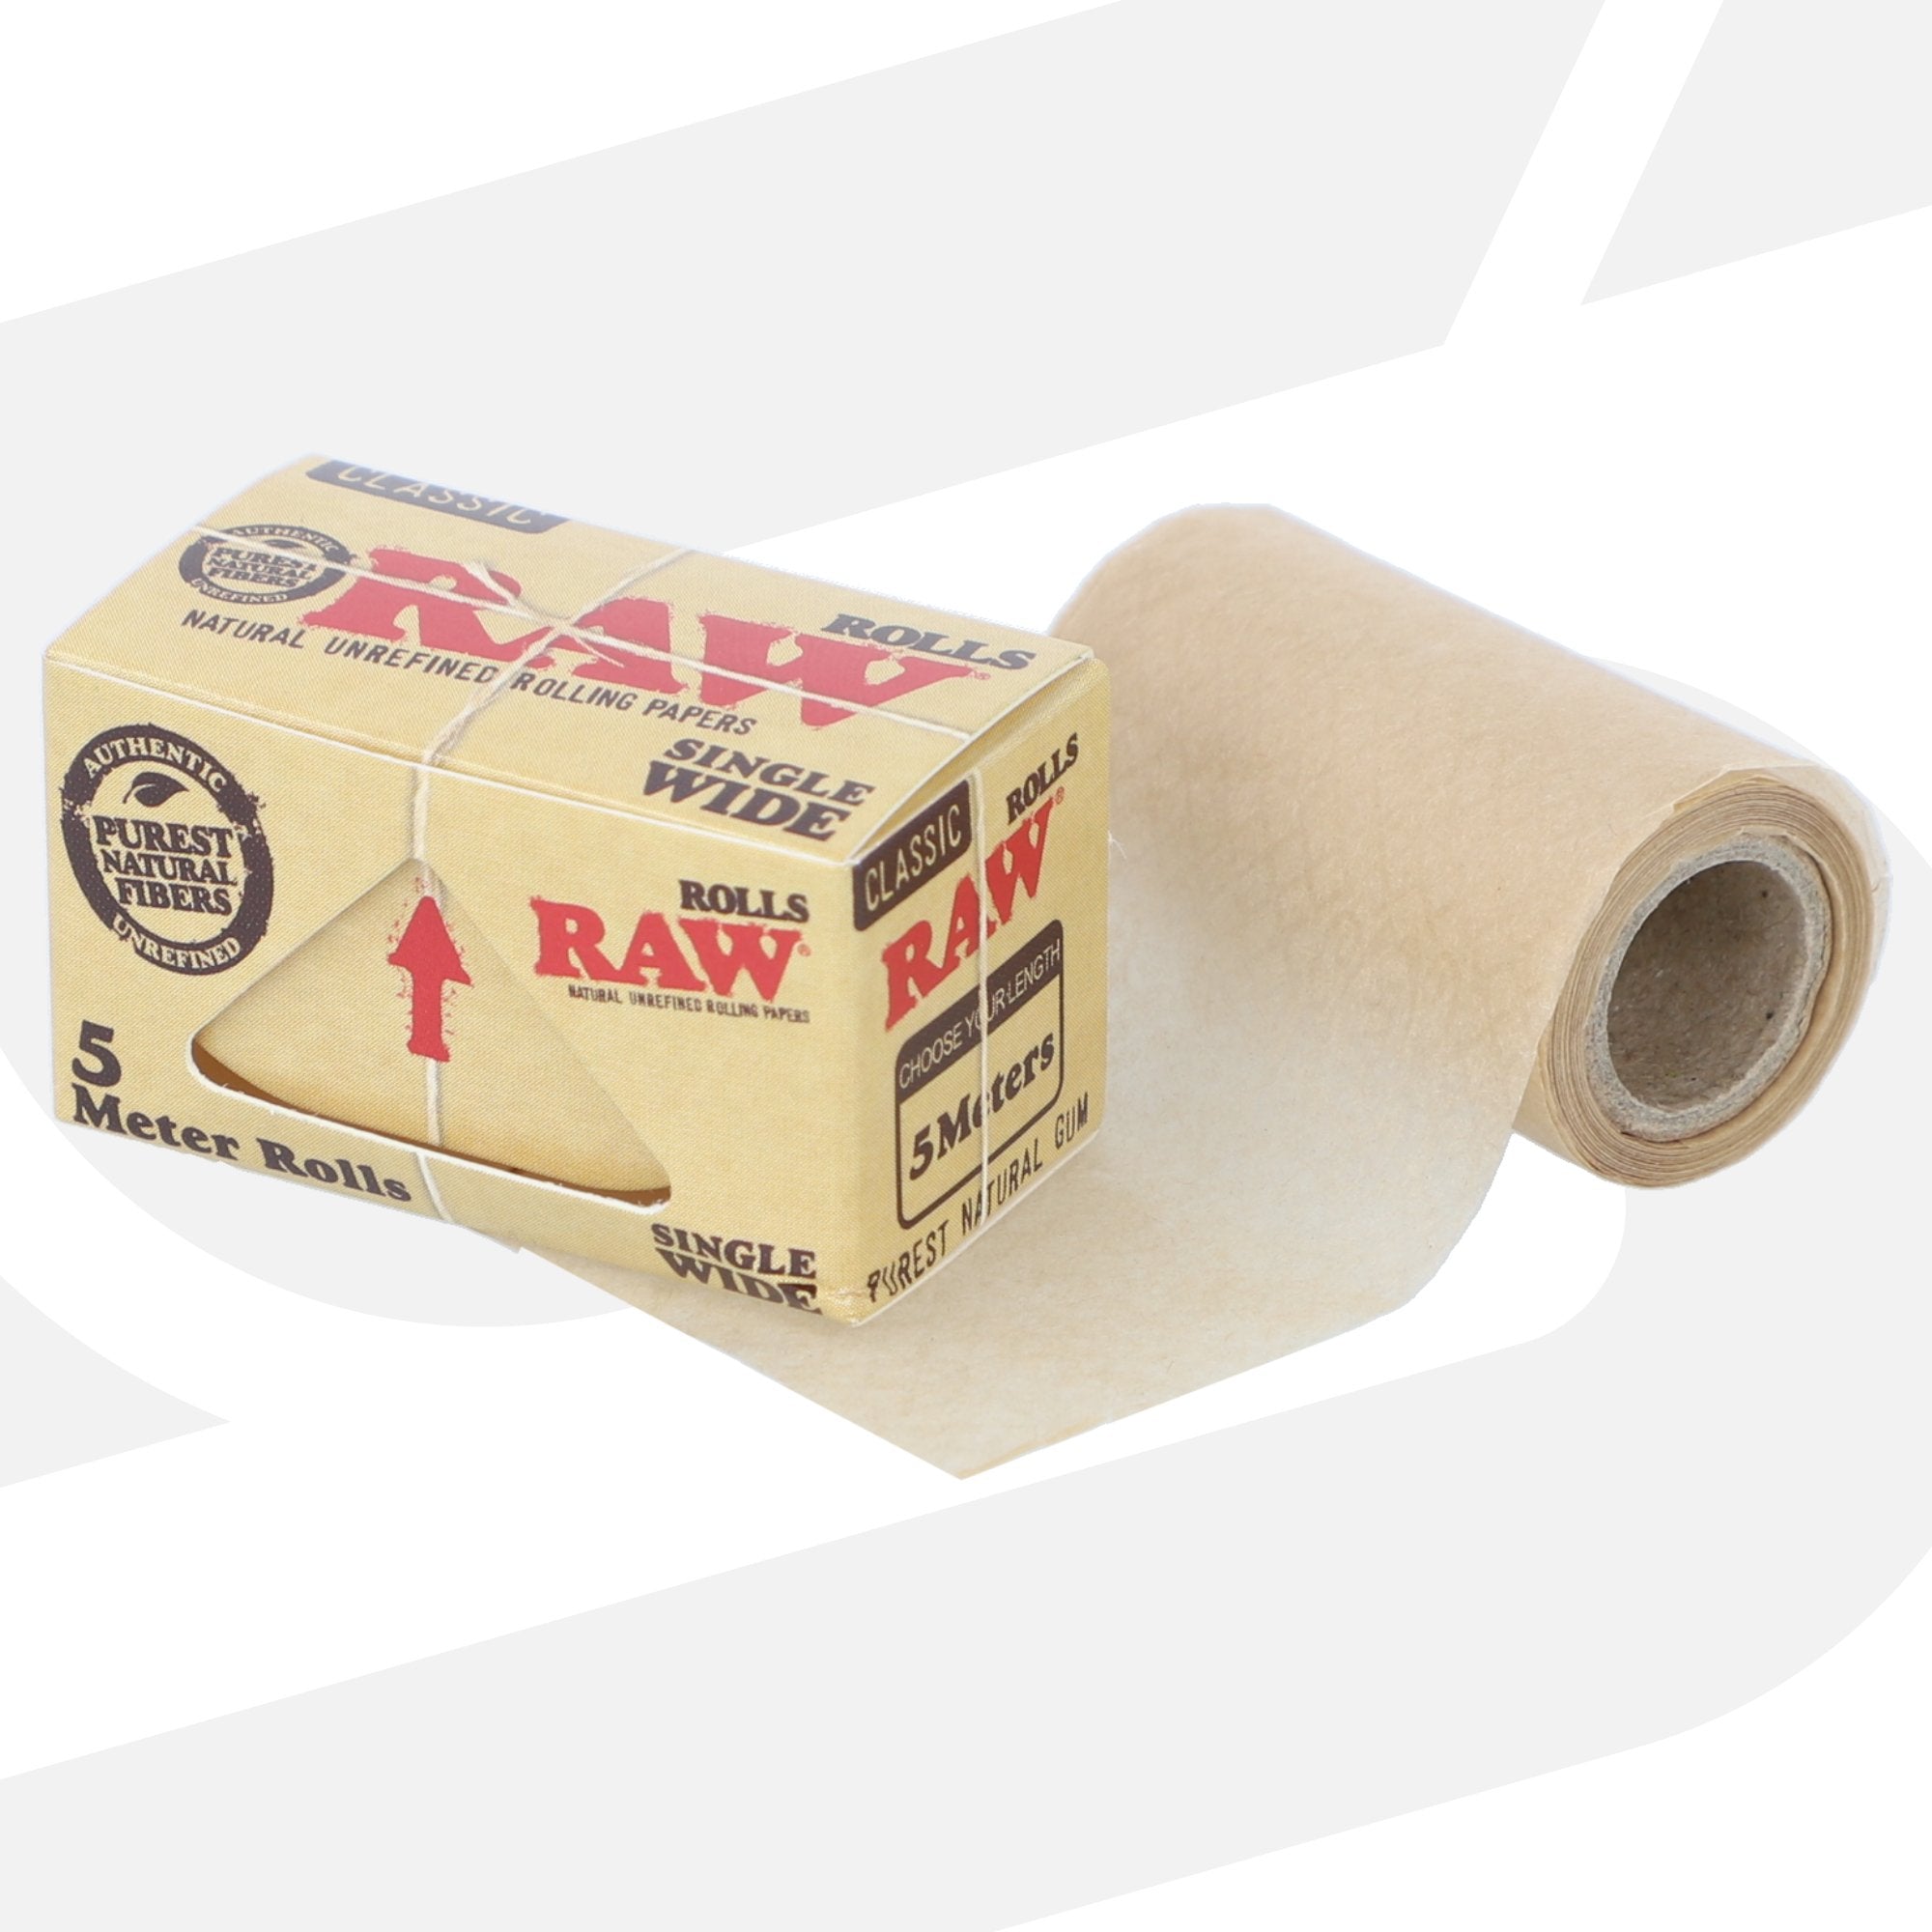 Buy RAW Classic Paper Rolls Single Wide - 5 Meters Online